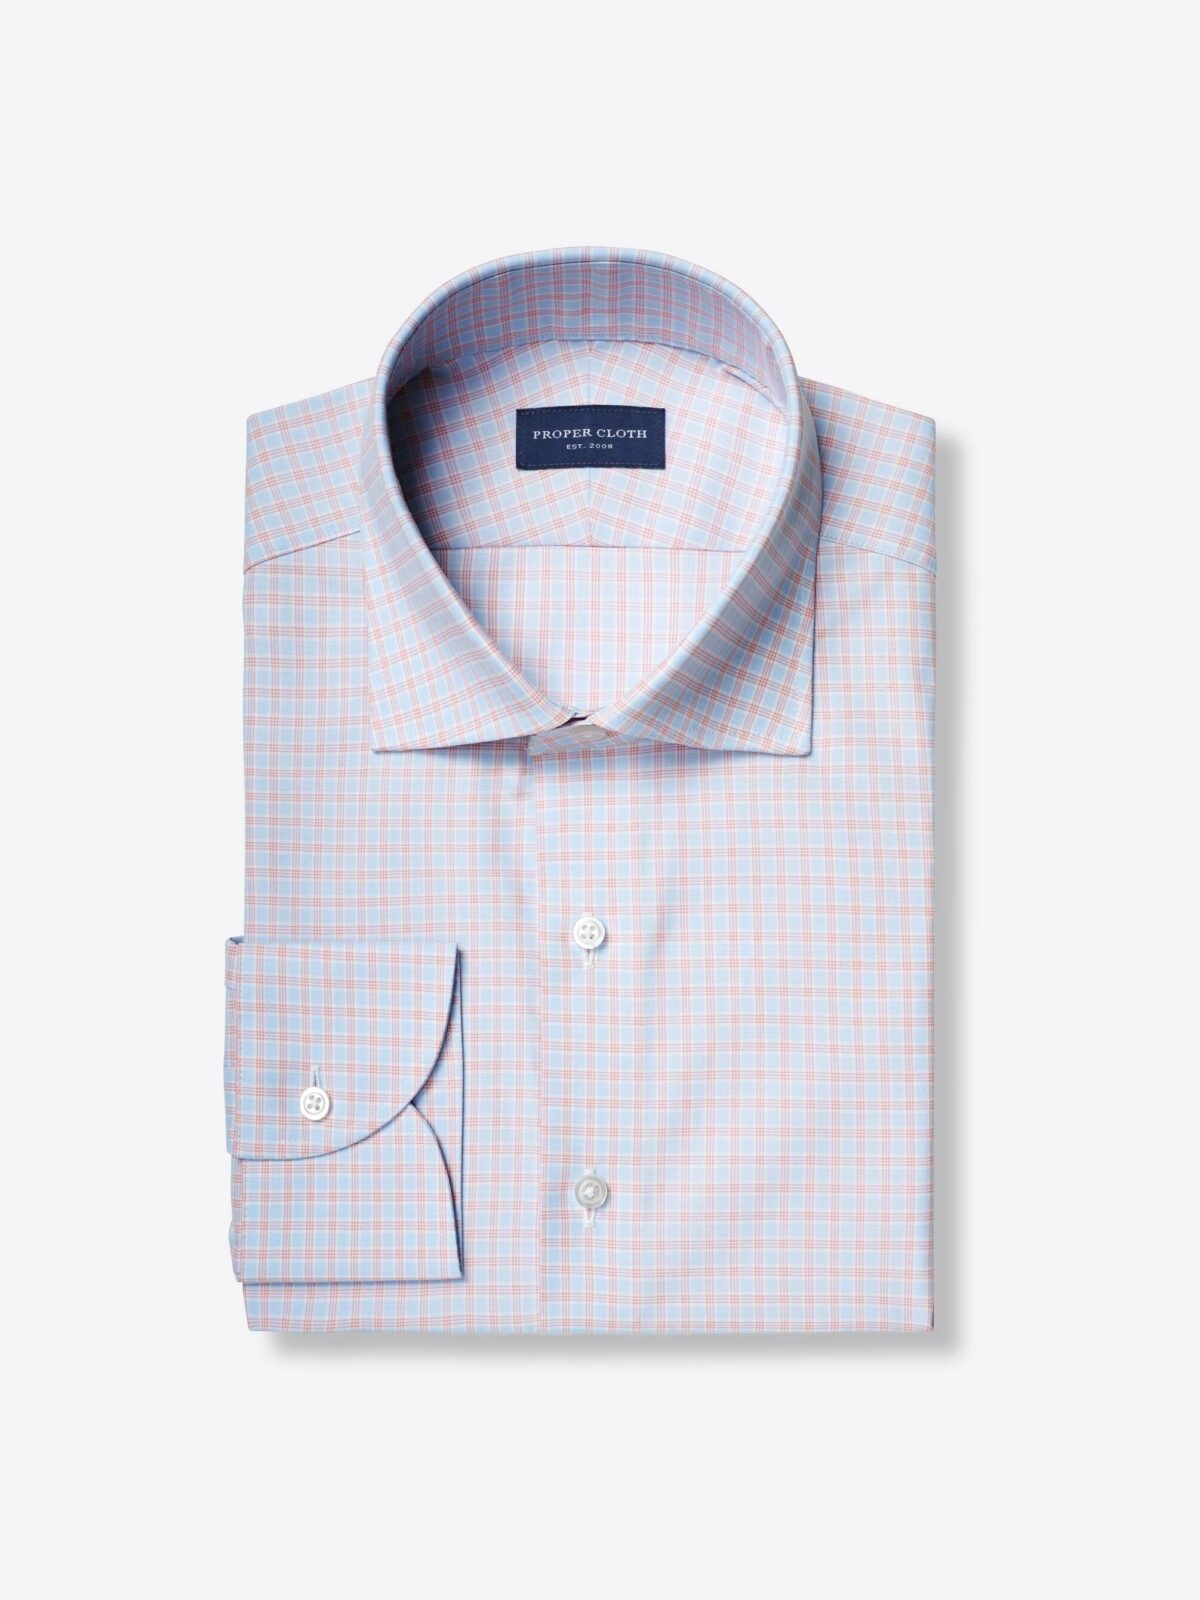 Thomas Mason WR Light Blue and Coral Check Shirt by Proper Cloth